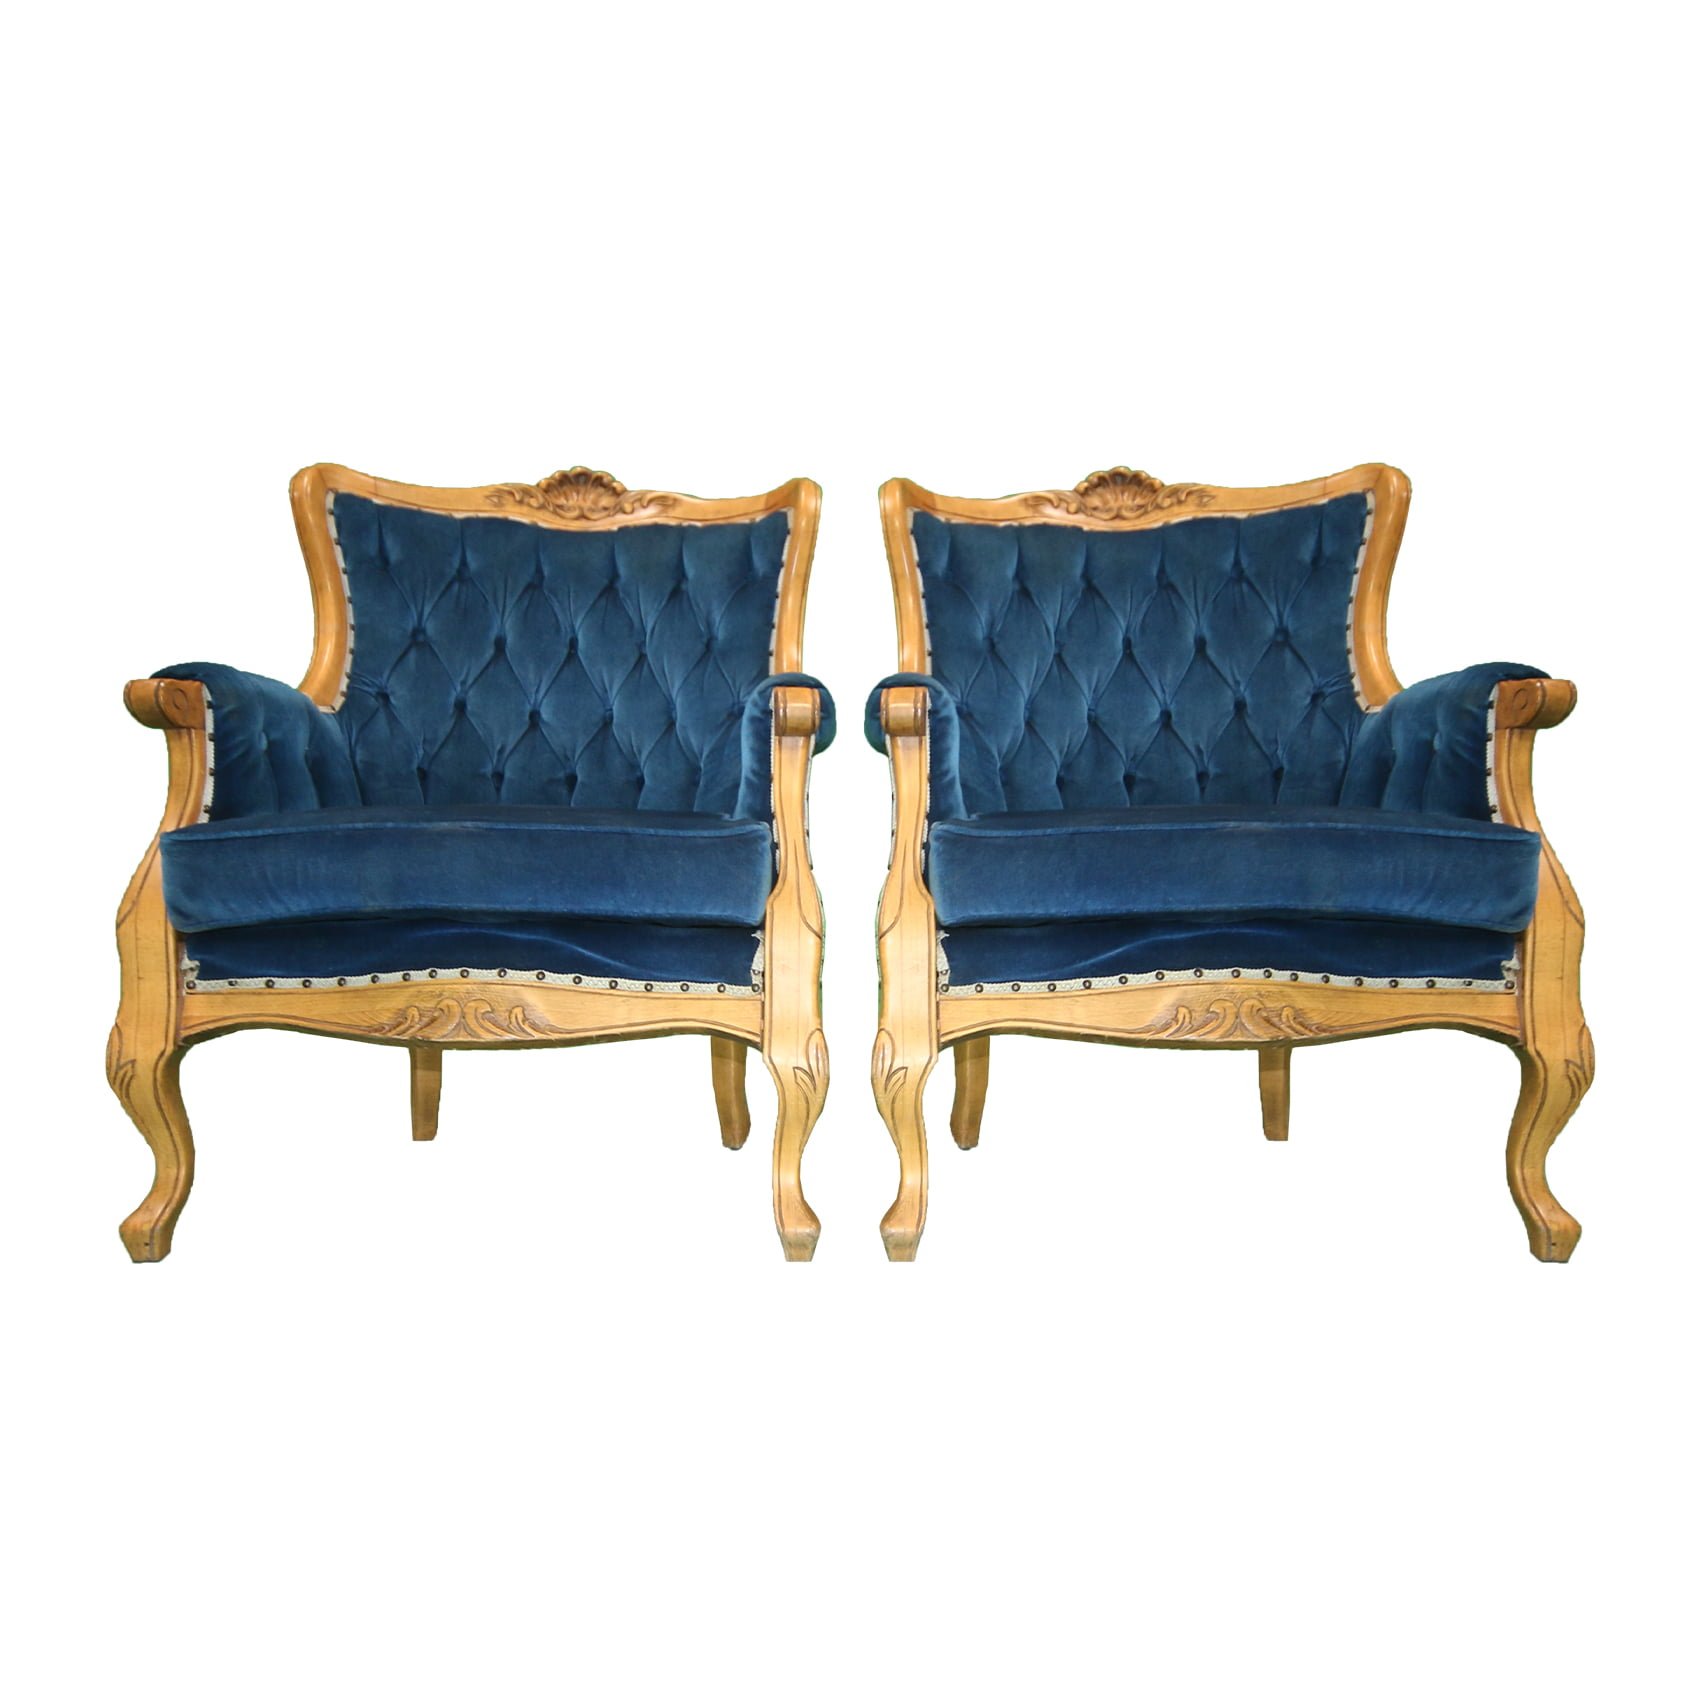 Victorian Beech wood arm chairs